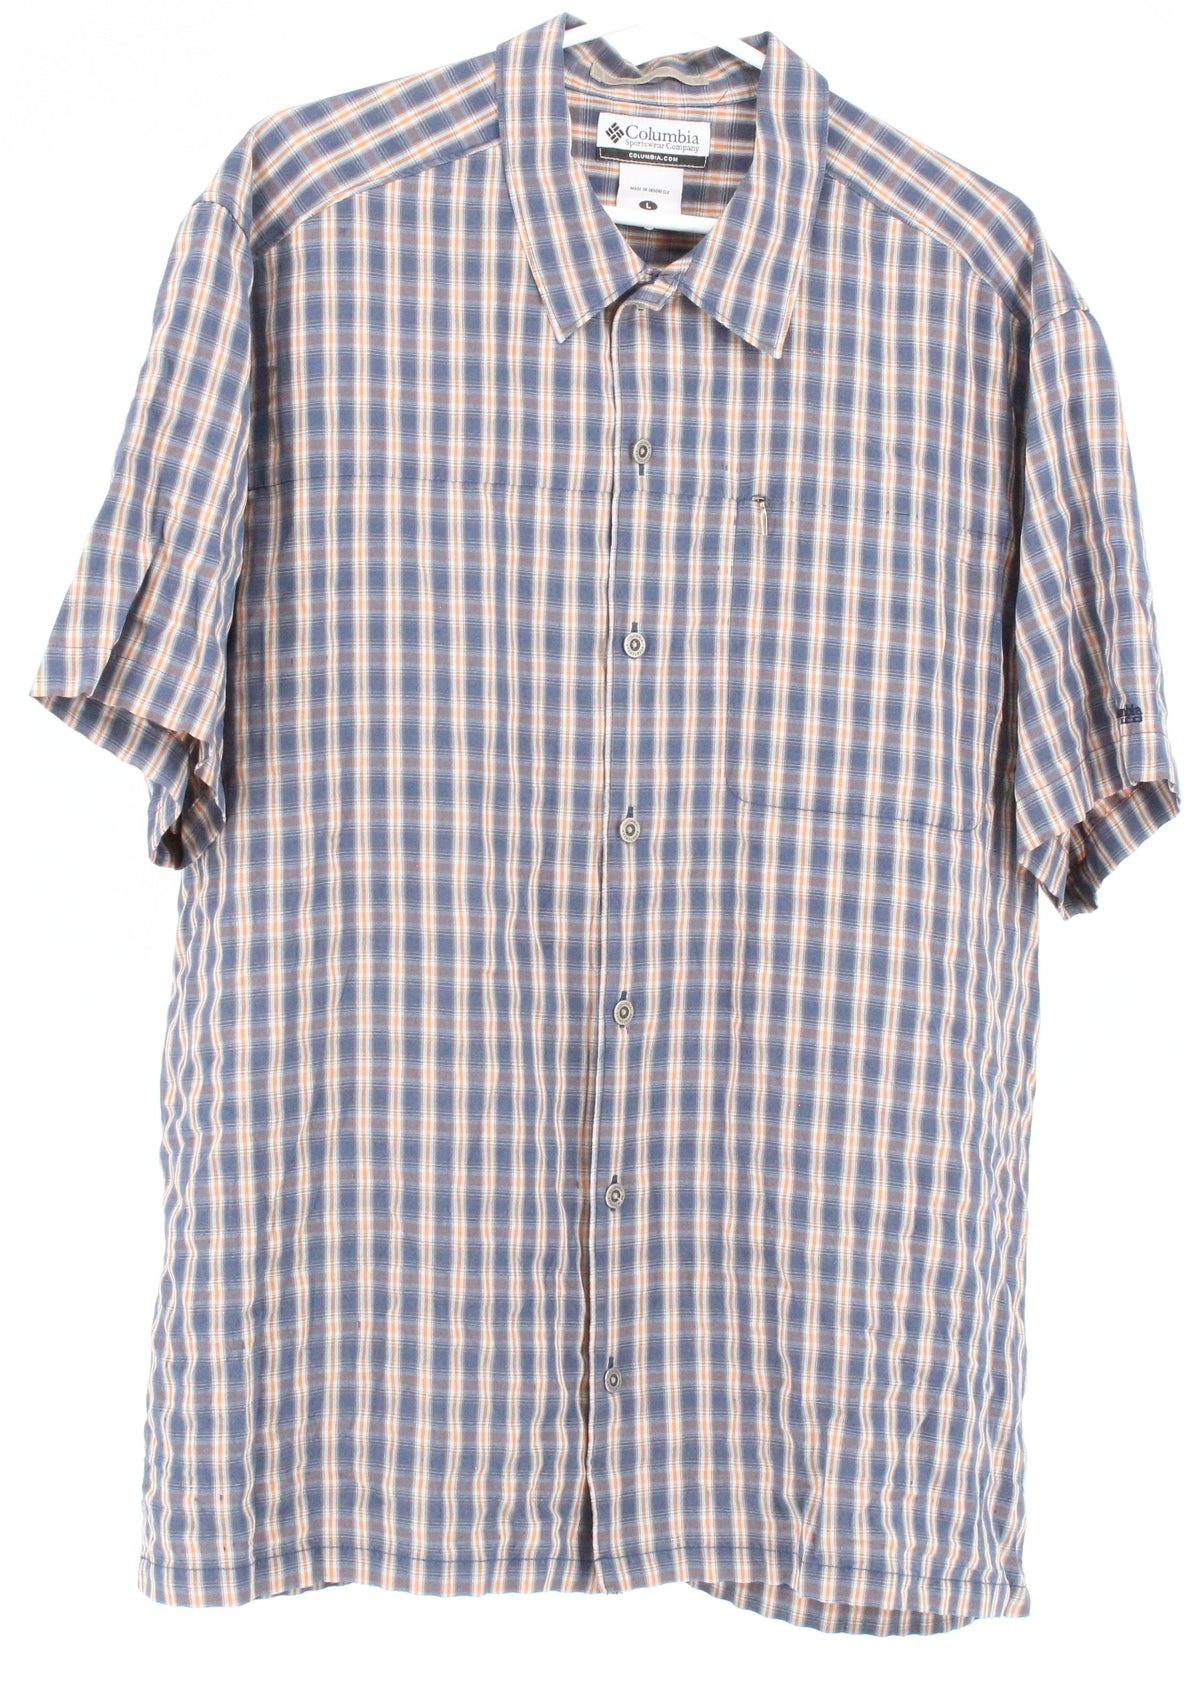 Columbia Sportswear Company Blue & Beige Check Print Zipped Front Pocket Short Sleeve Shirt